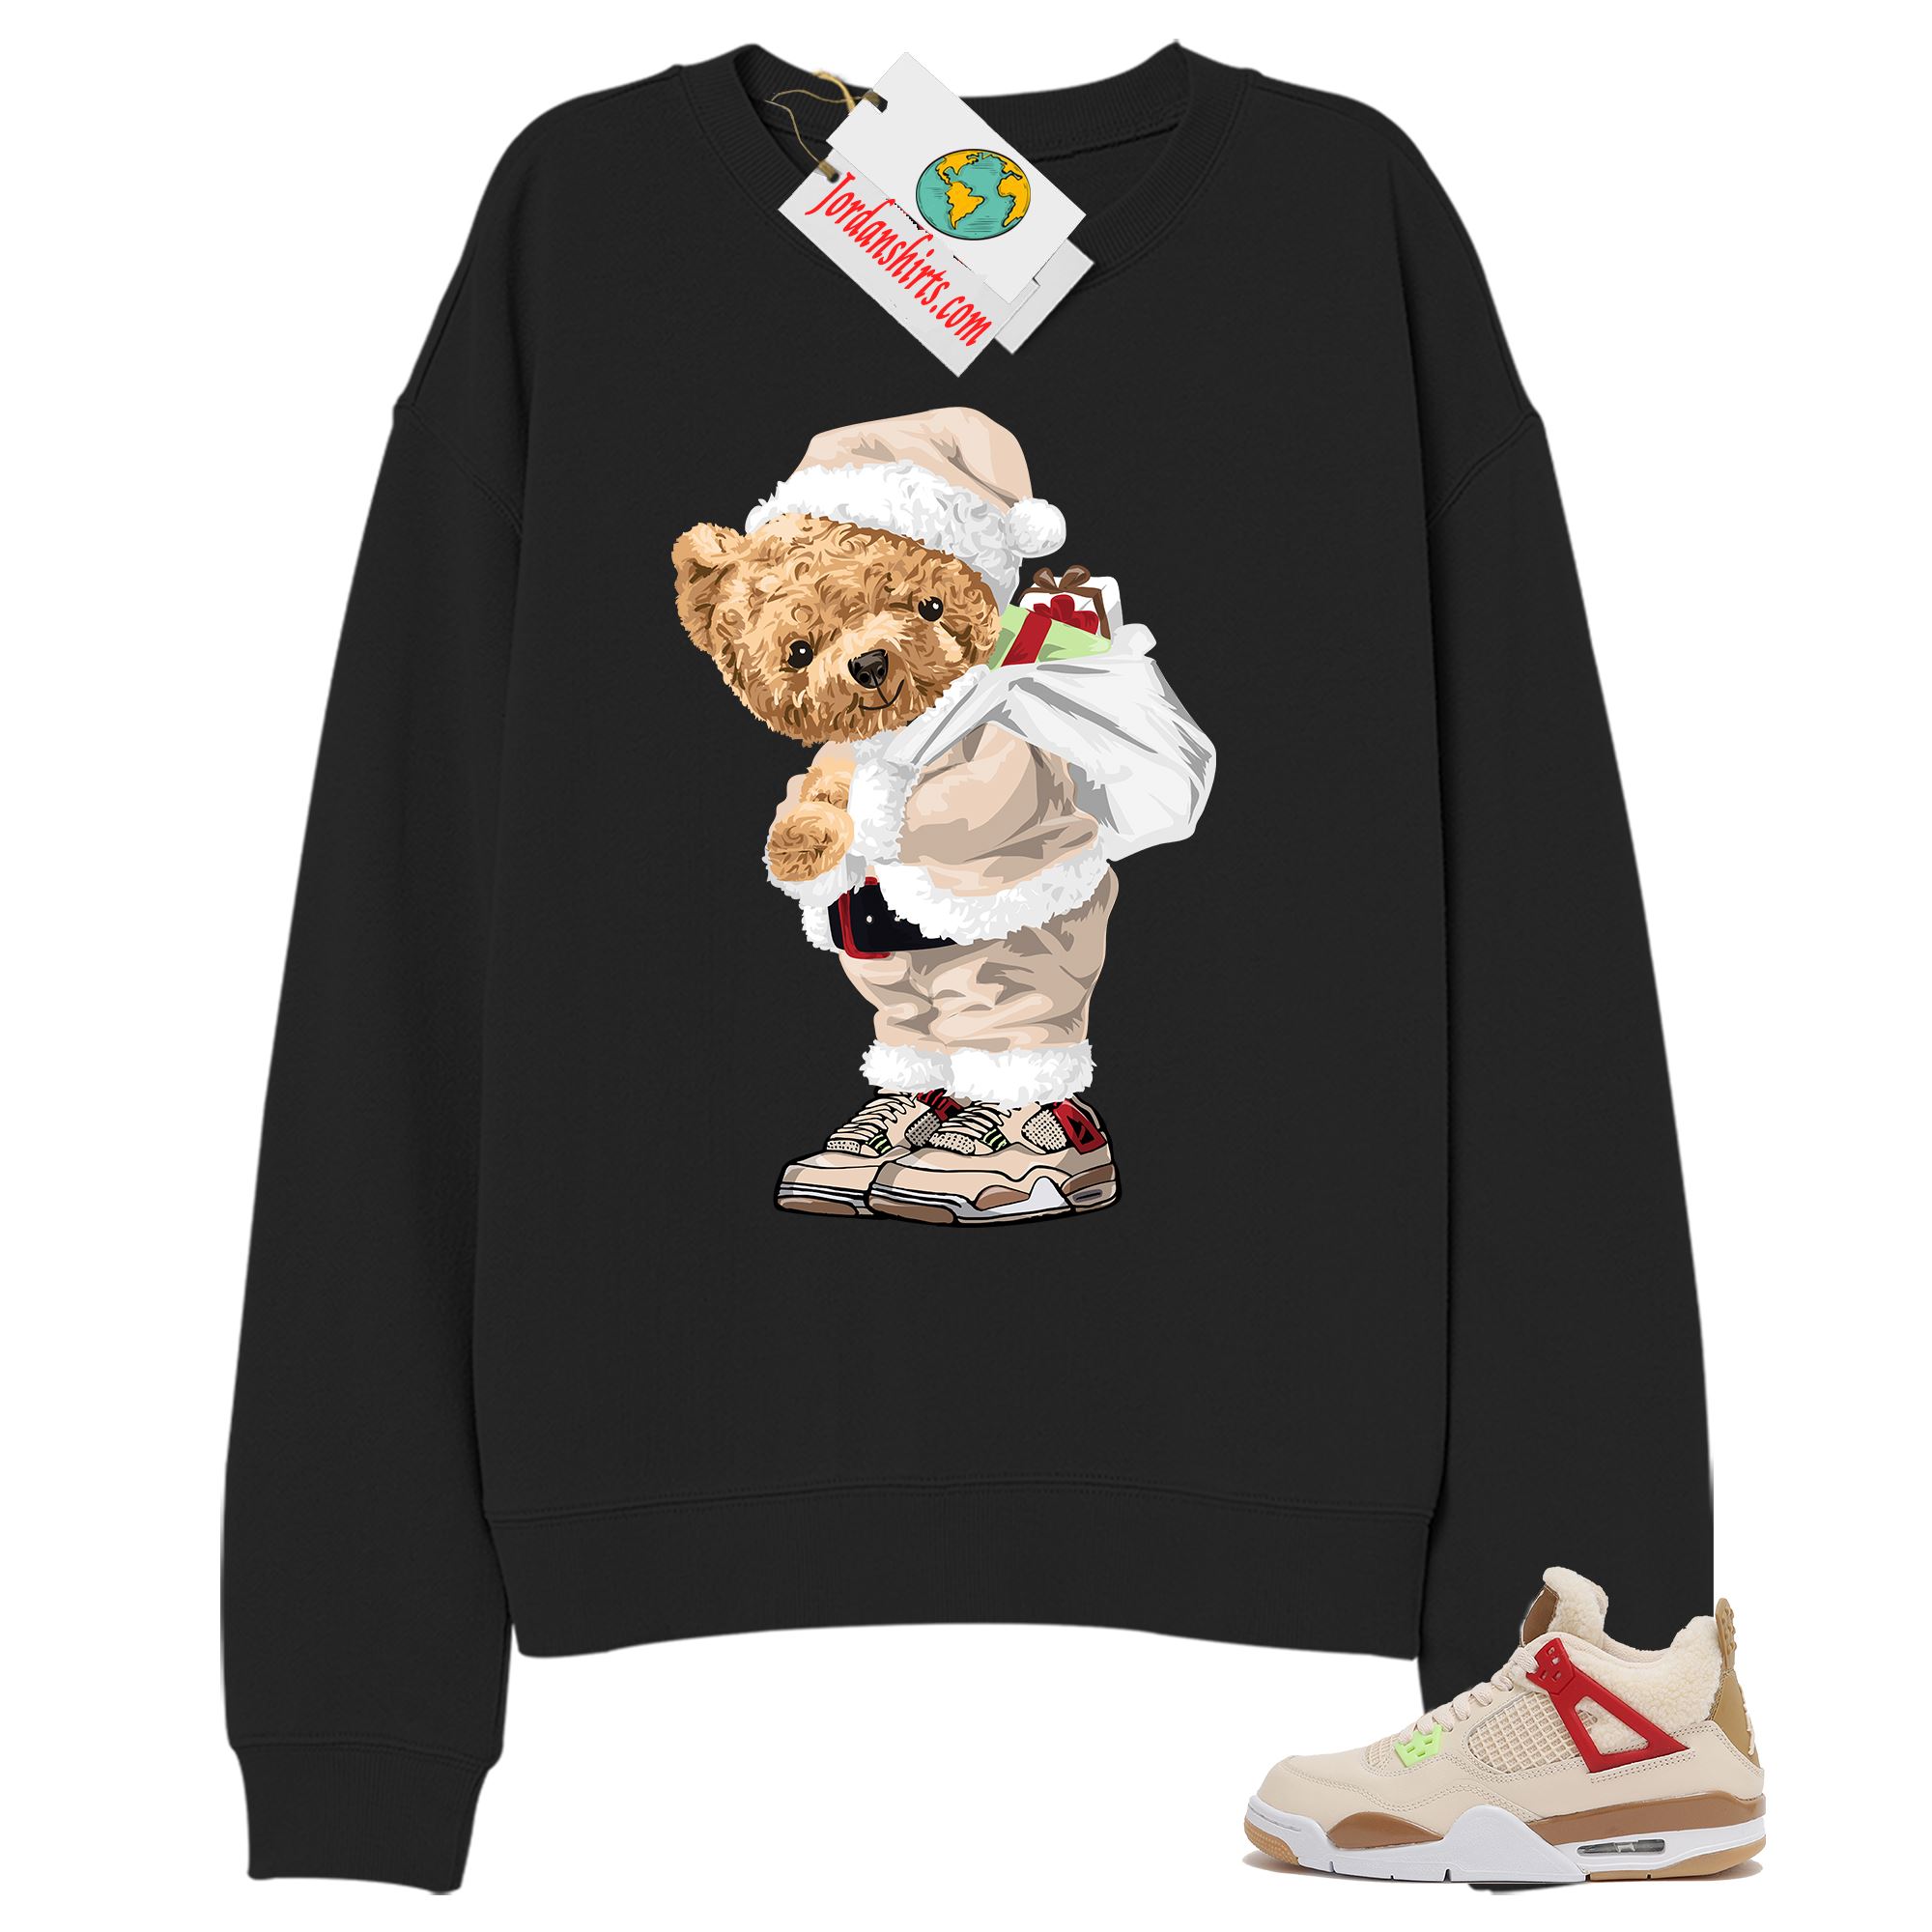 Jordan 4 Sweatshirt, Teddy Bear In Santa Claus Black Sweatshirt Air Jordan 4 Wild Things 4s Size Up To 5xl